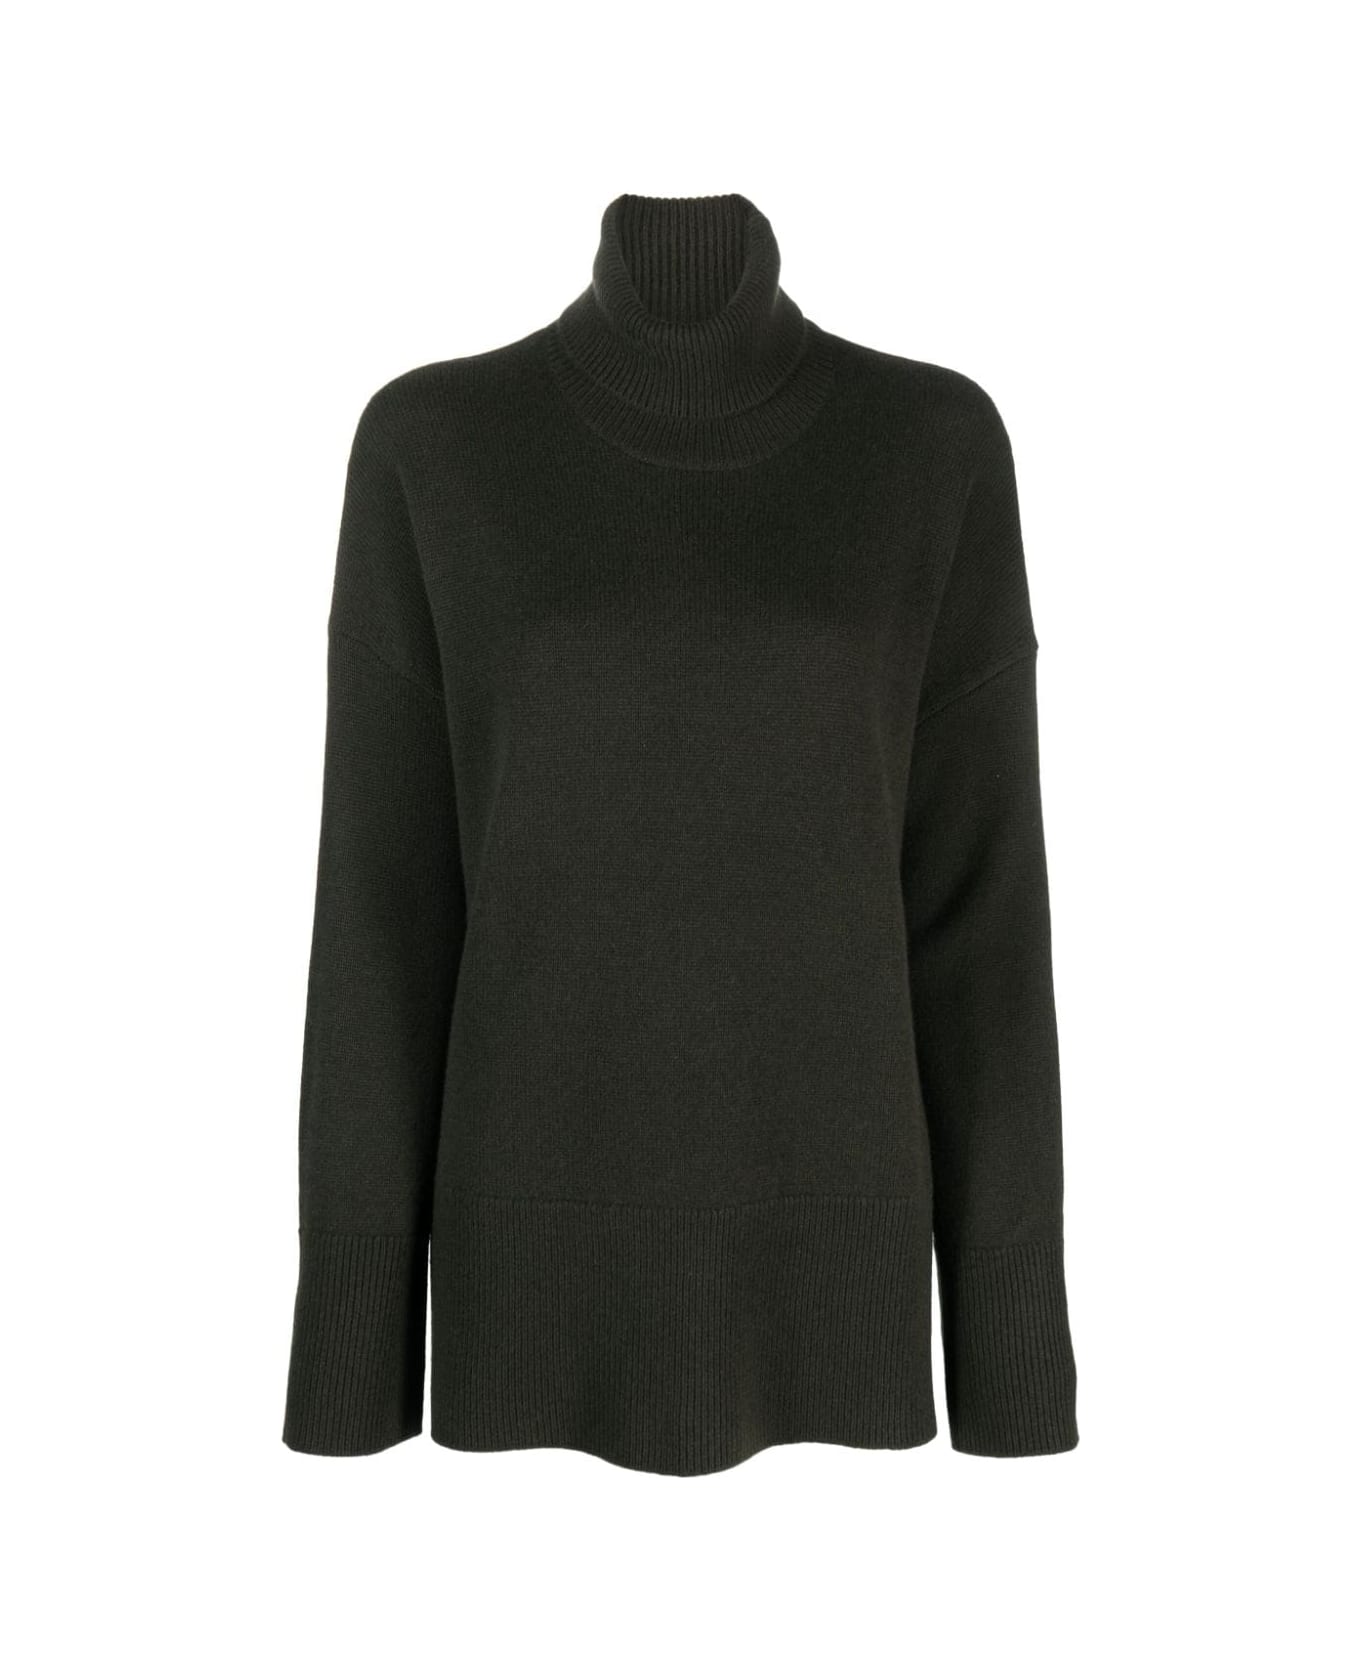 Parosh Turtle Neck Long Sweater - Olive Green ニットウェア